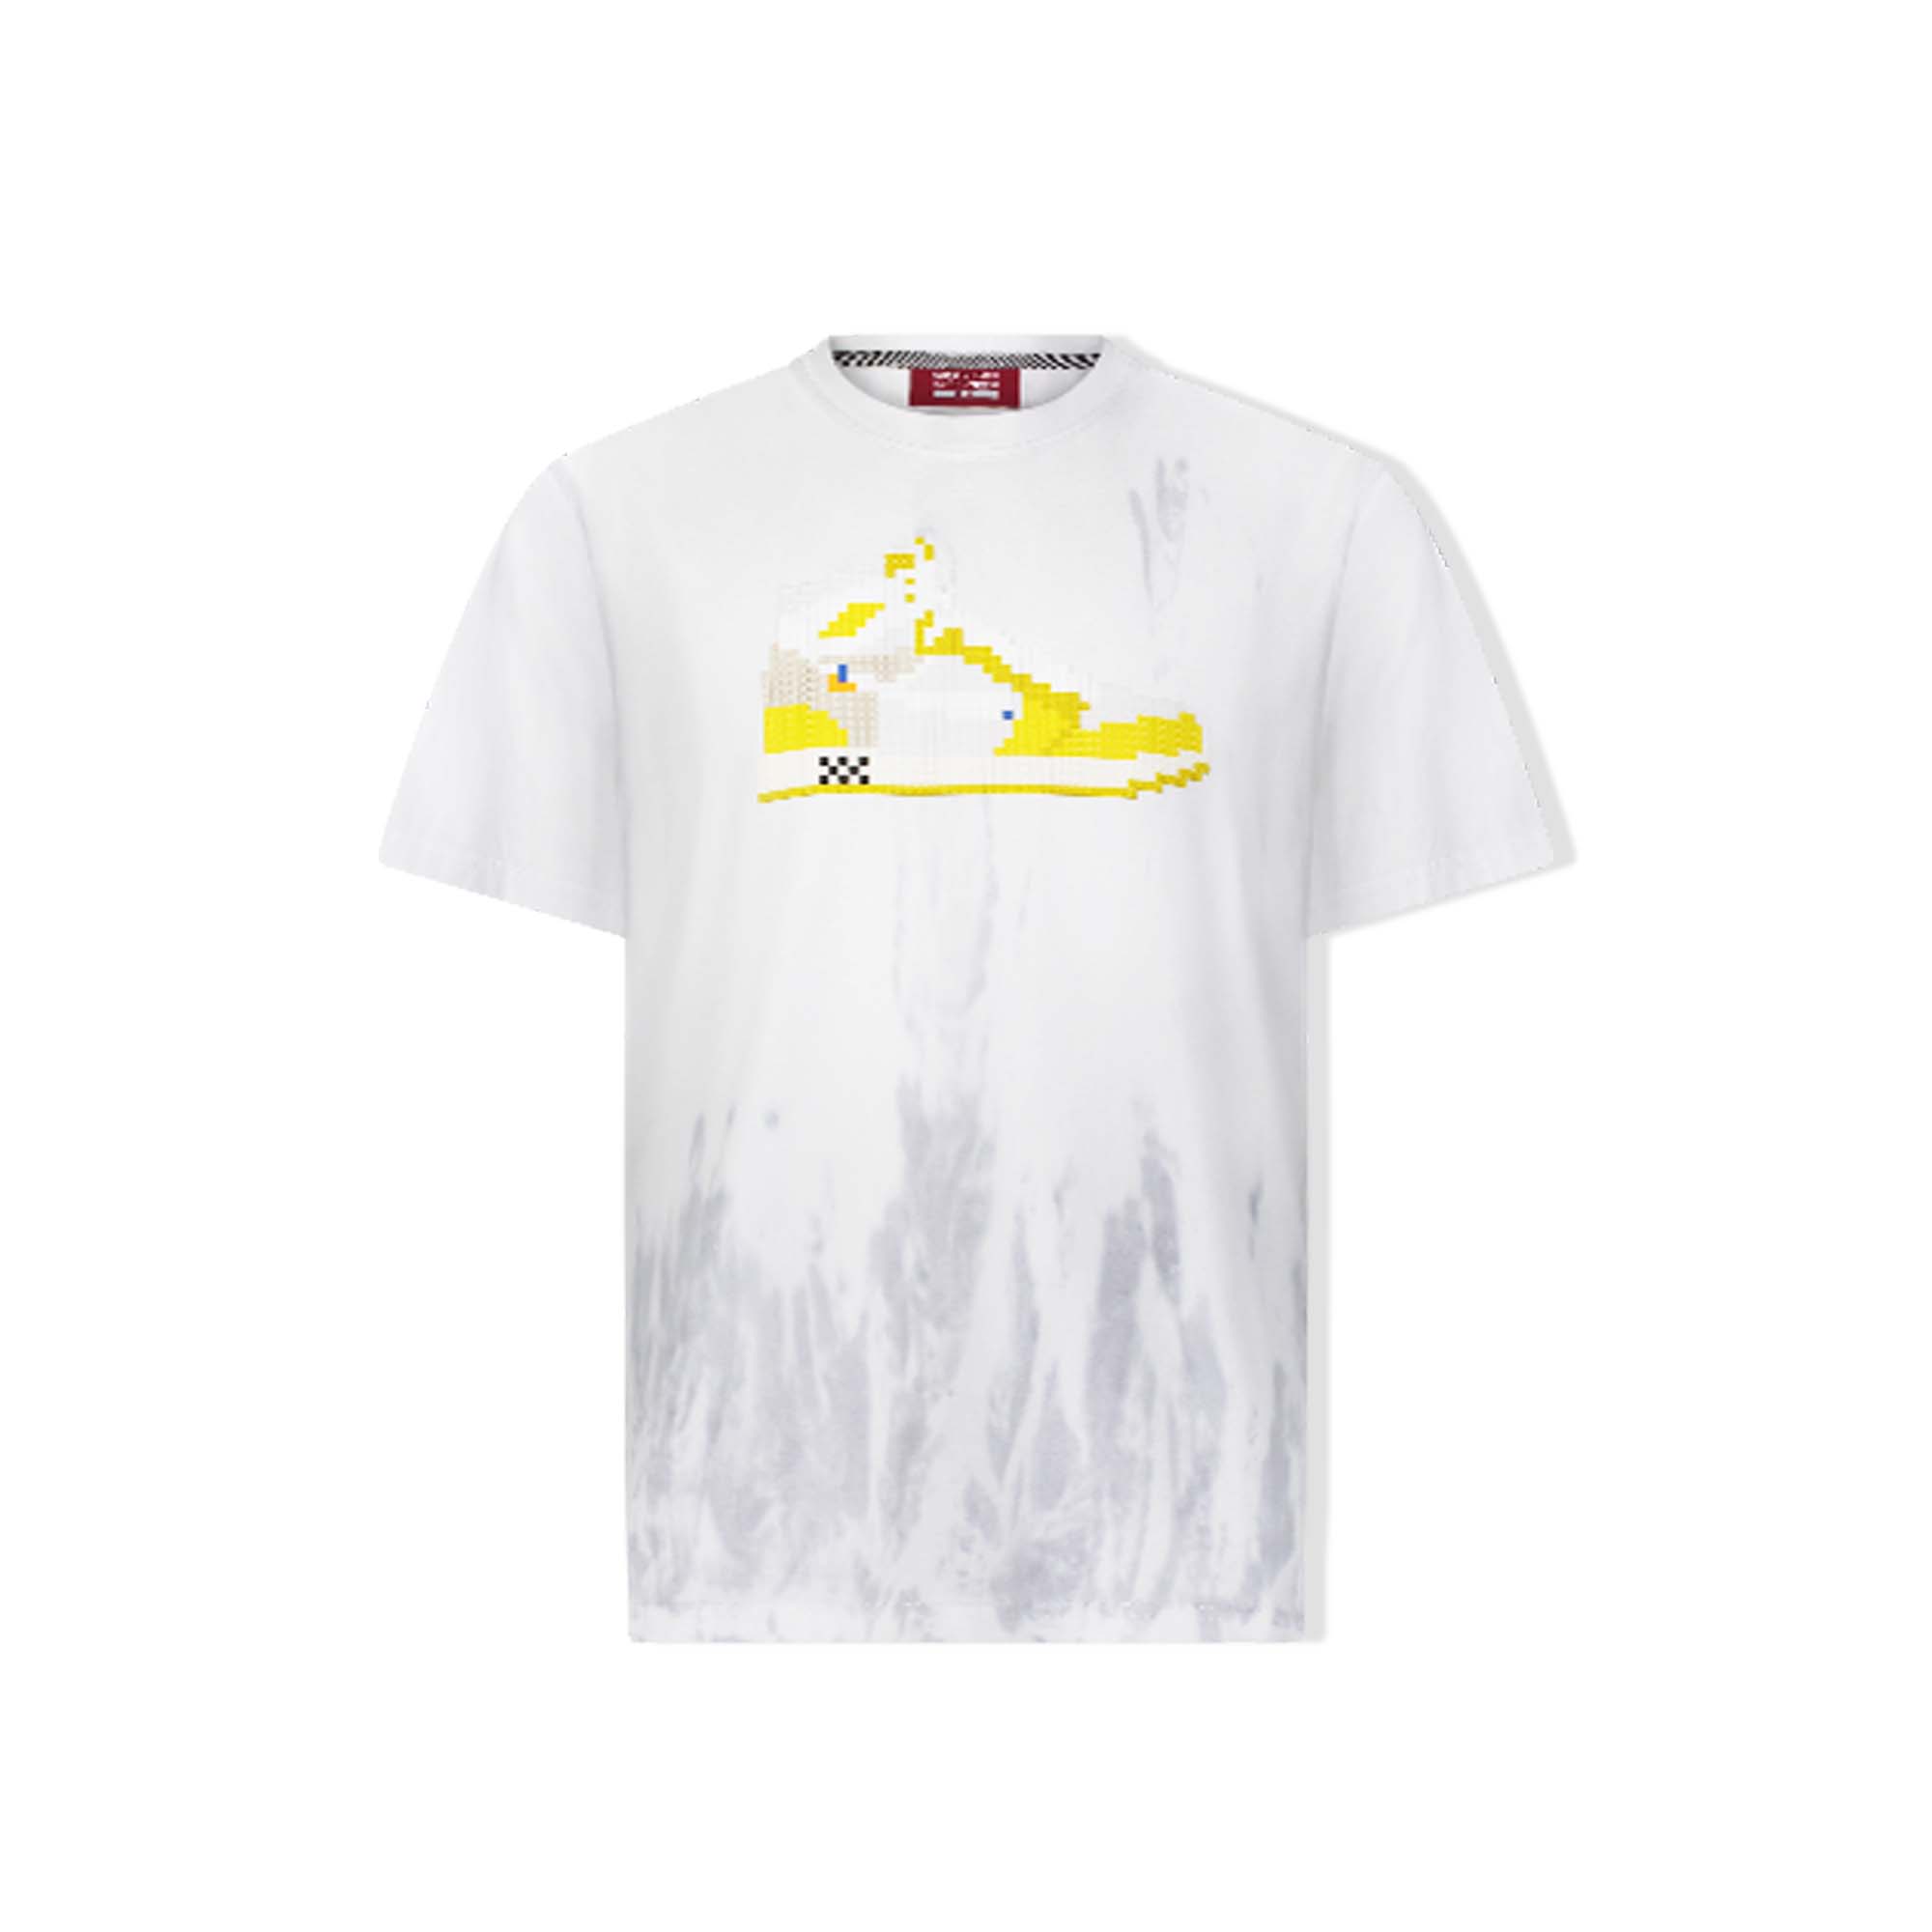 Buy 8-Bit Canary T-Shirt - White/Grey Online